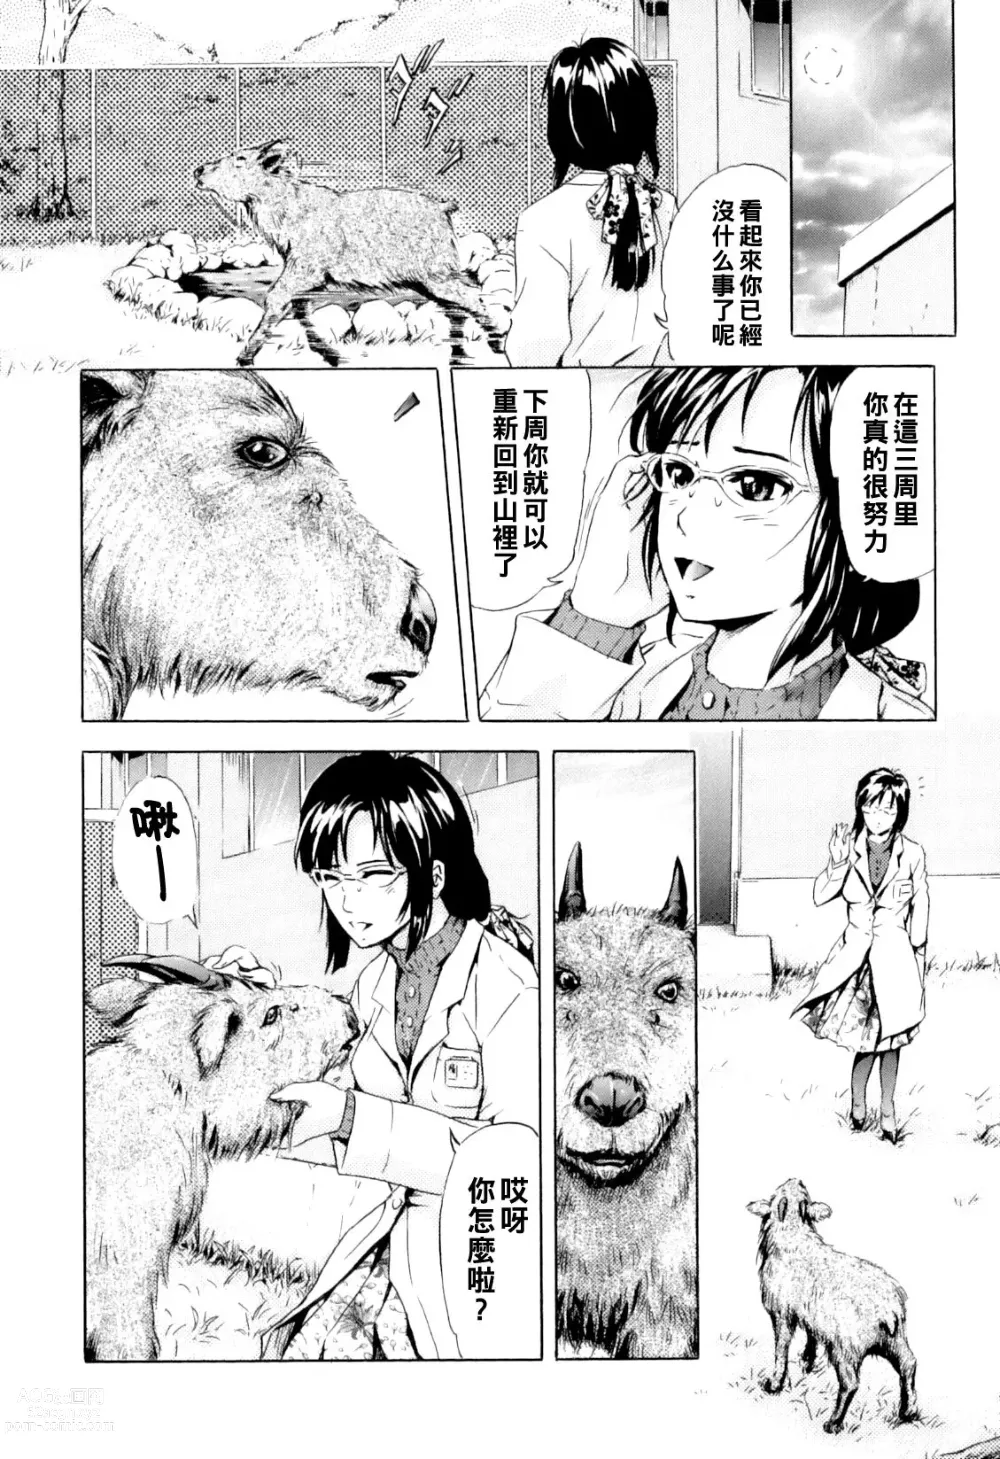 Page 6 of manga Tokubetsu Tennen Kinenbutsu - Special Natural Monuments